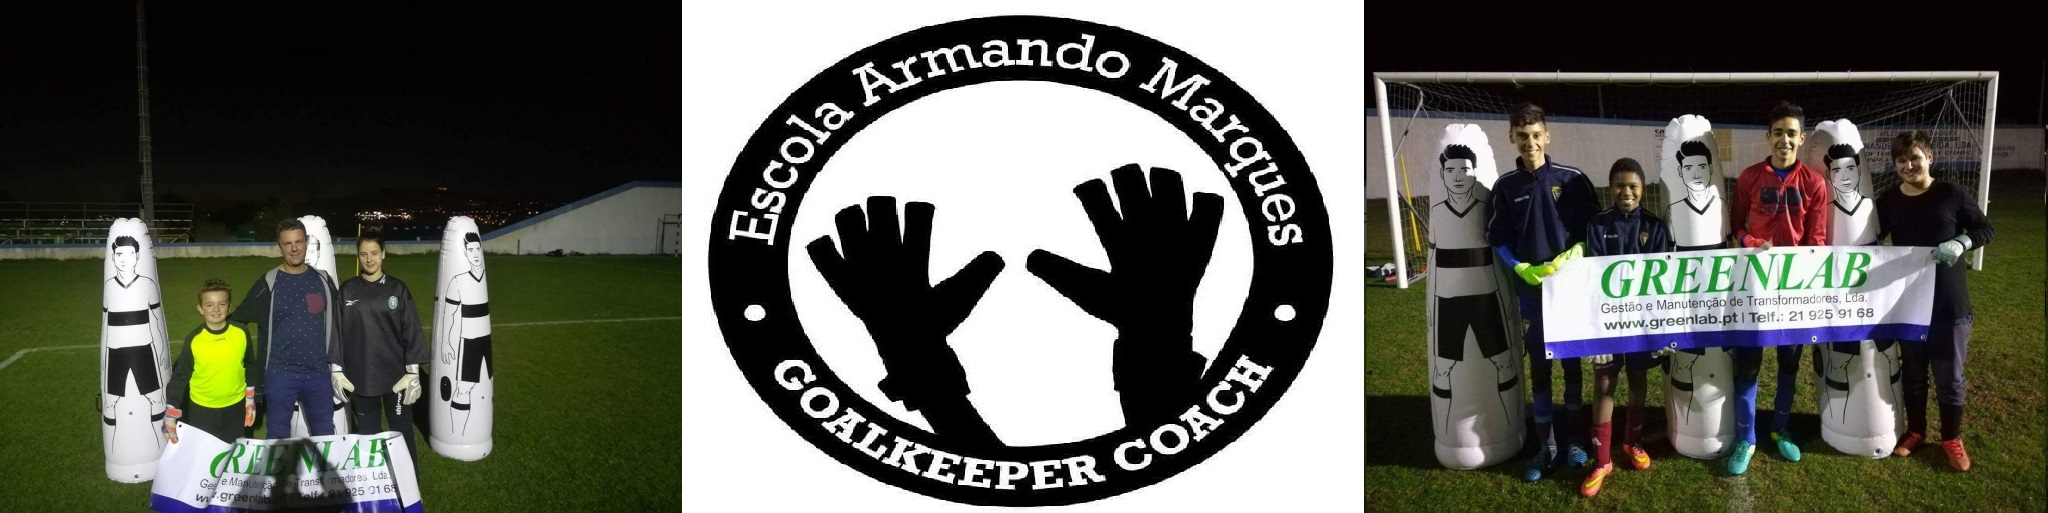 Greenlab - Escola Armando Marques - Goalkeeper Coach